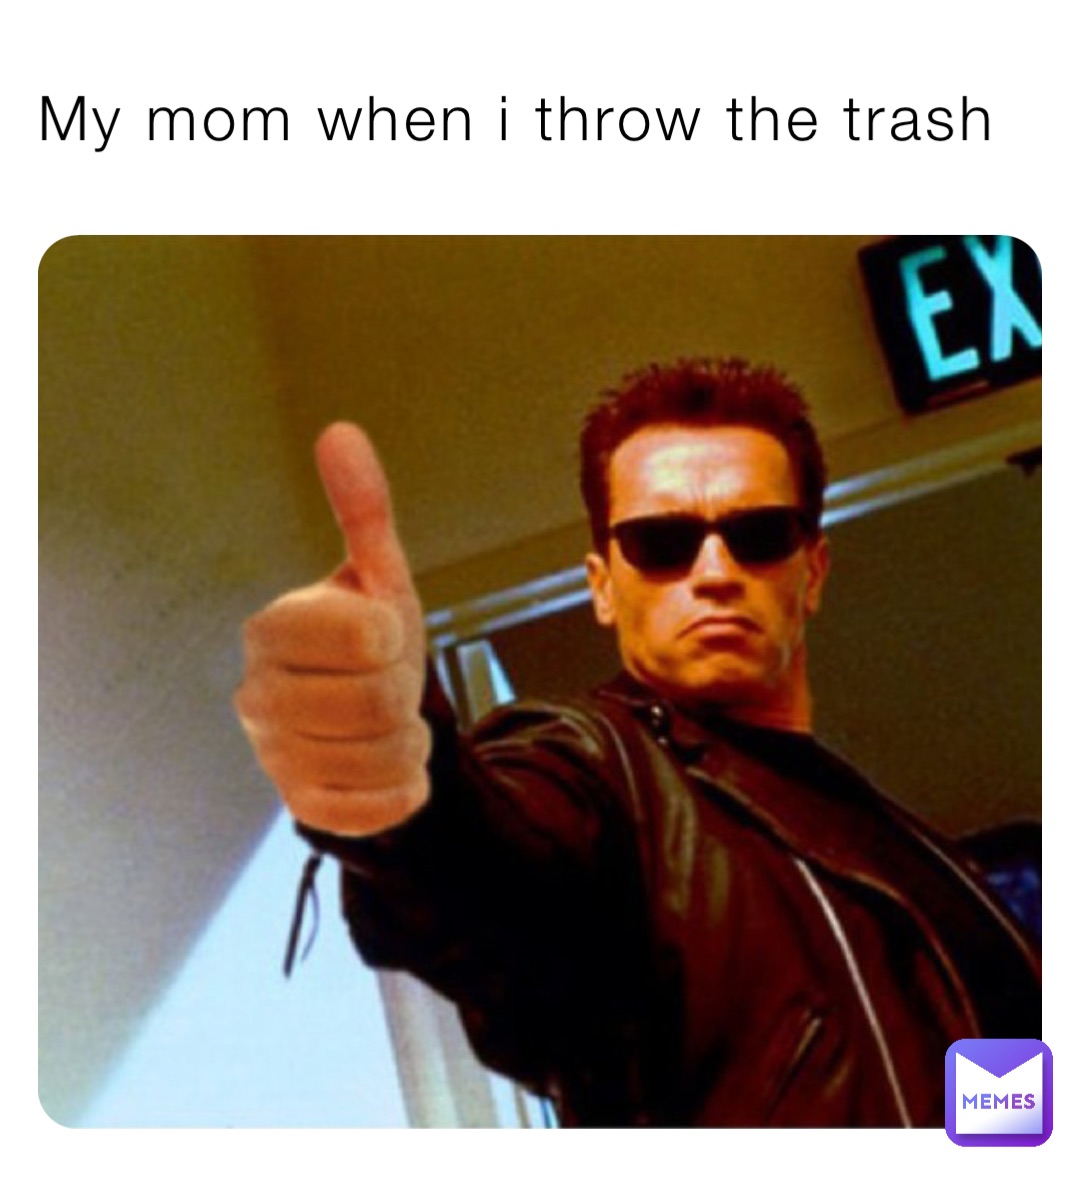 My mom when i throw the trash